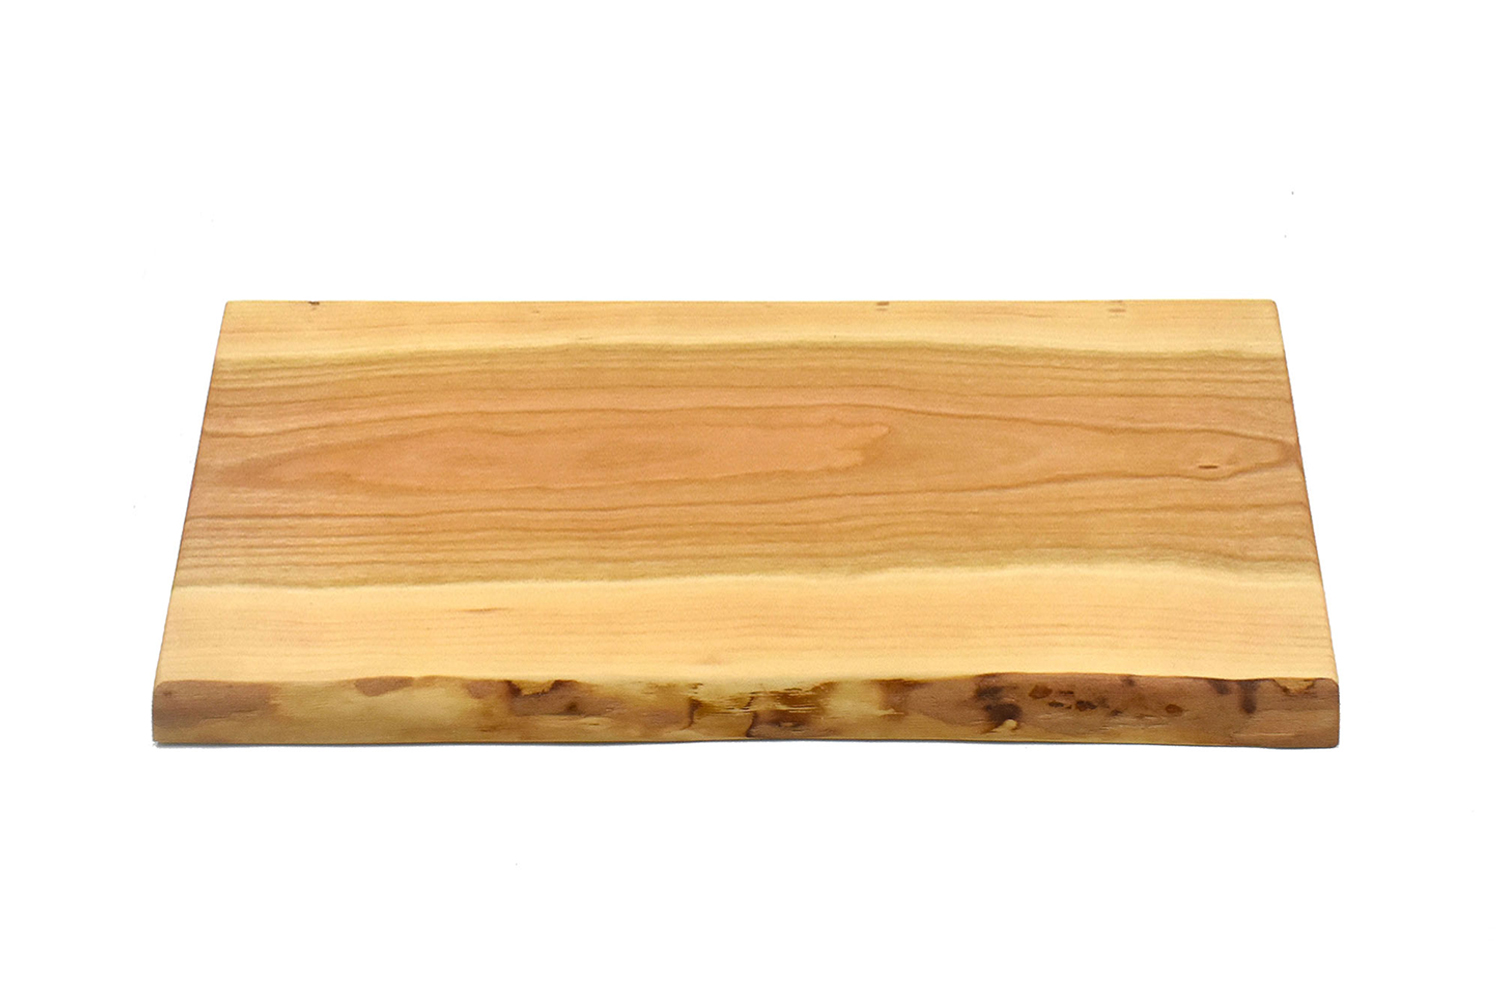 Cherry cutting board